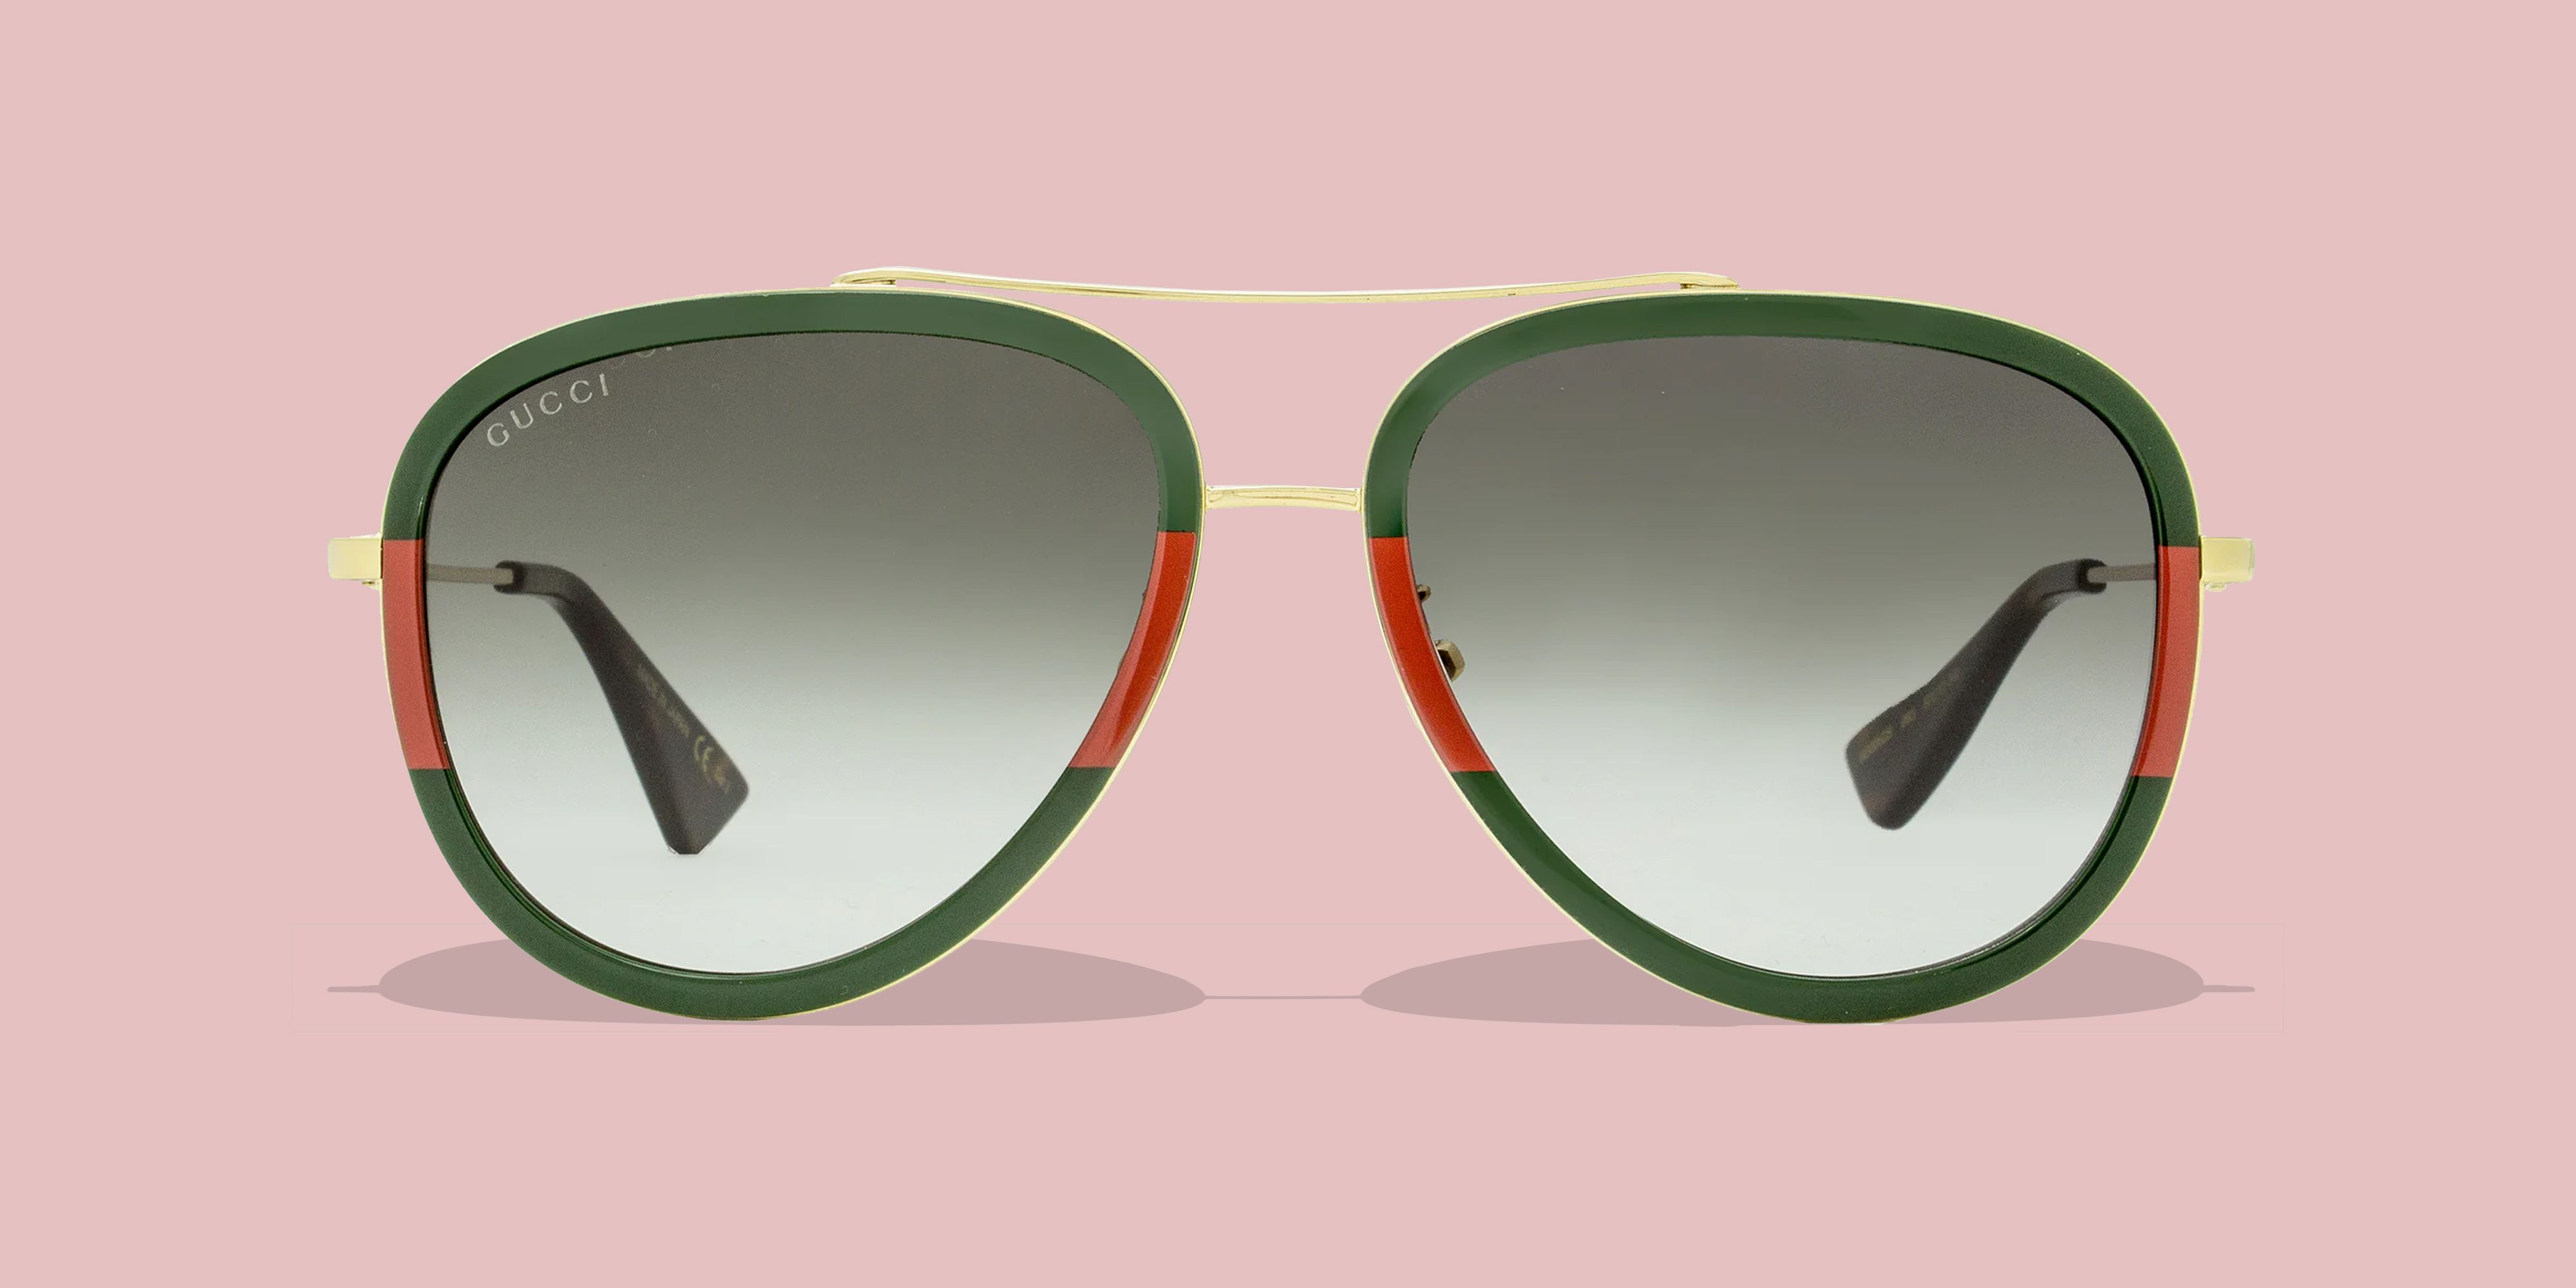 Gucci Women's Green/Red Aviator sunglasses - Accessories